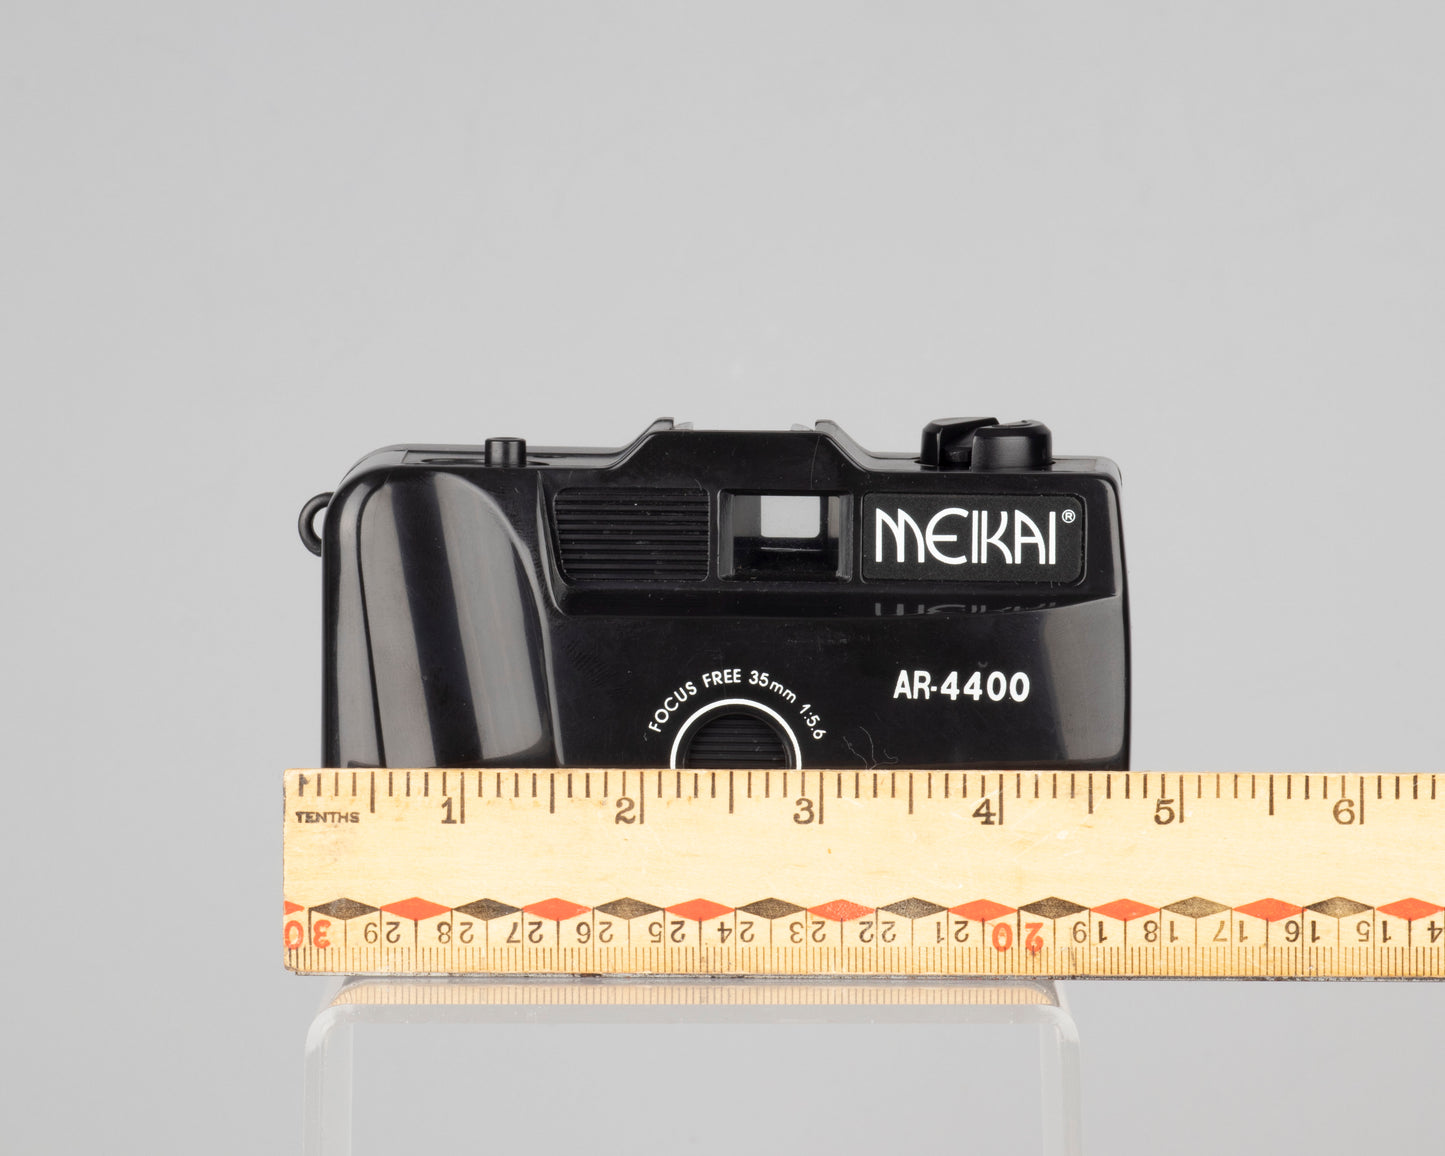 Meikai AR-4400 focus free 35mm camera